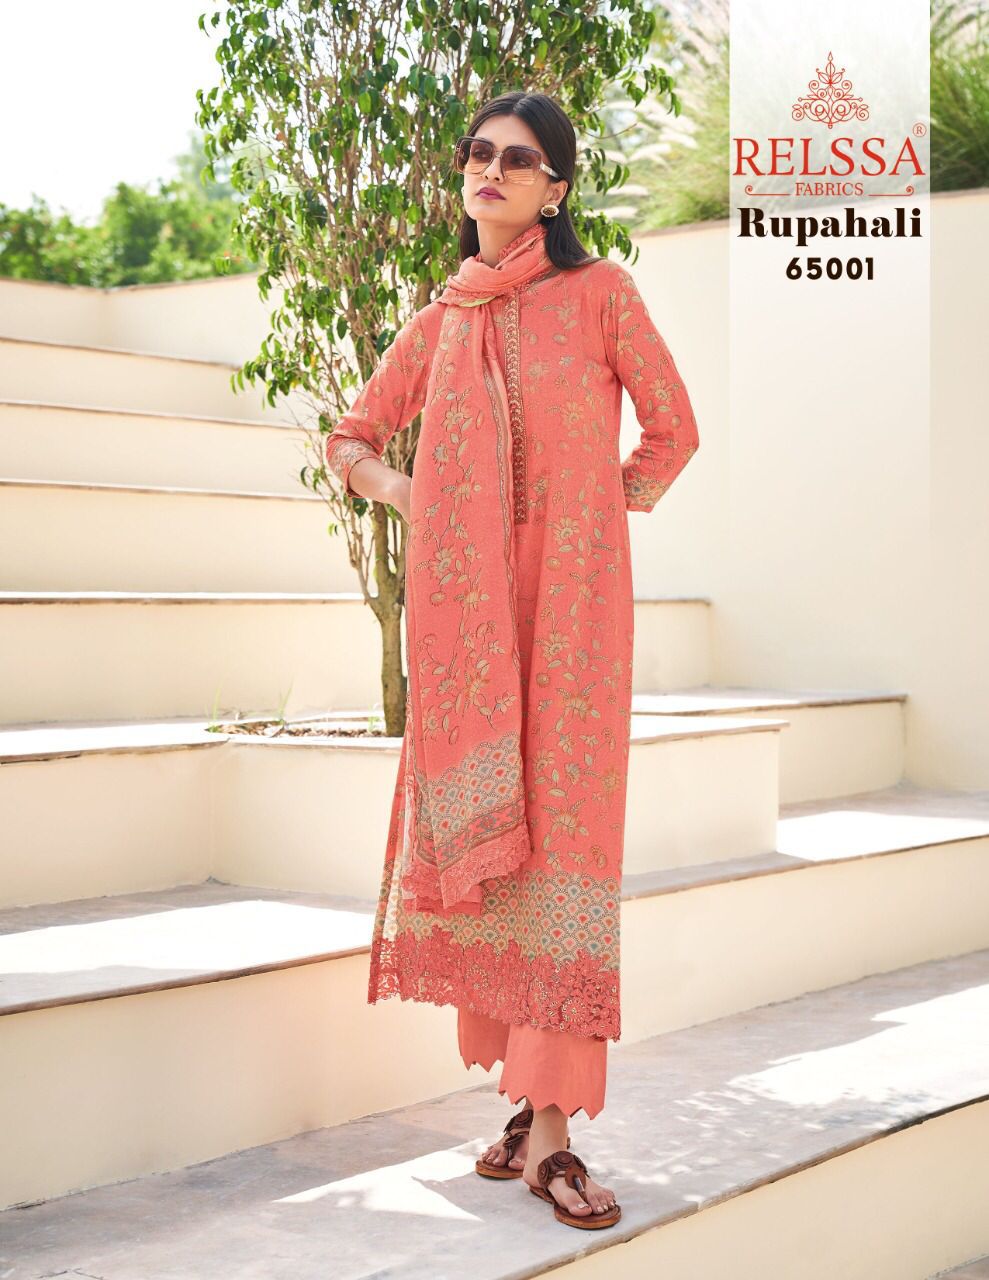 Relssa Fabrics Rupahali 65001